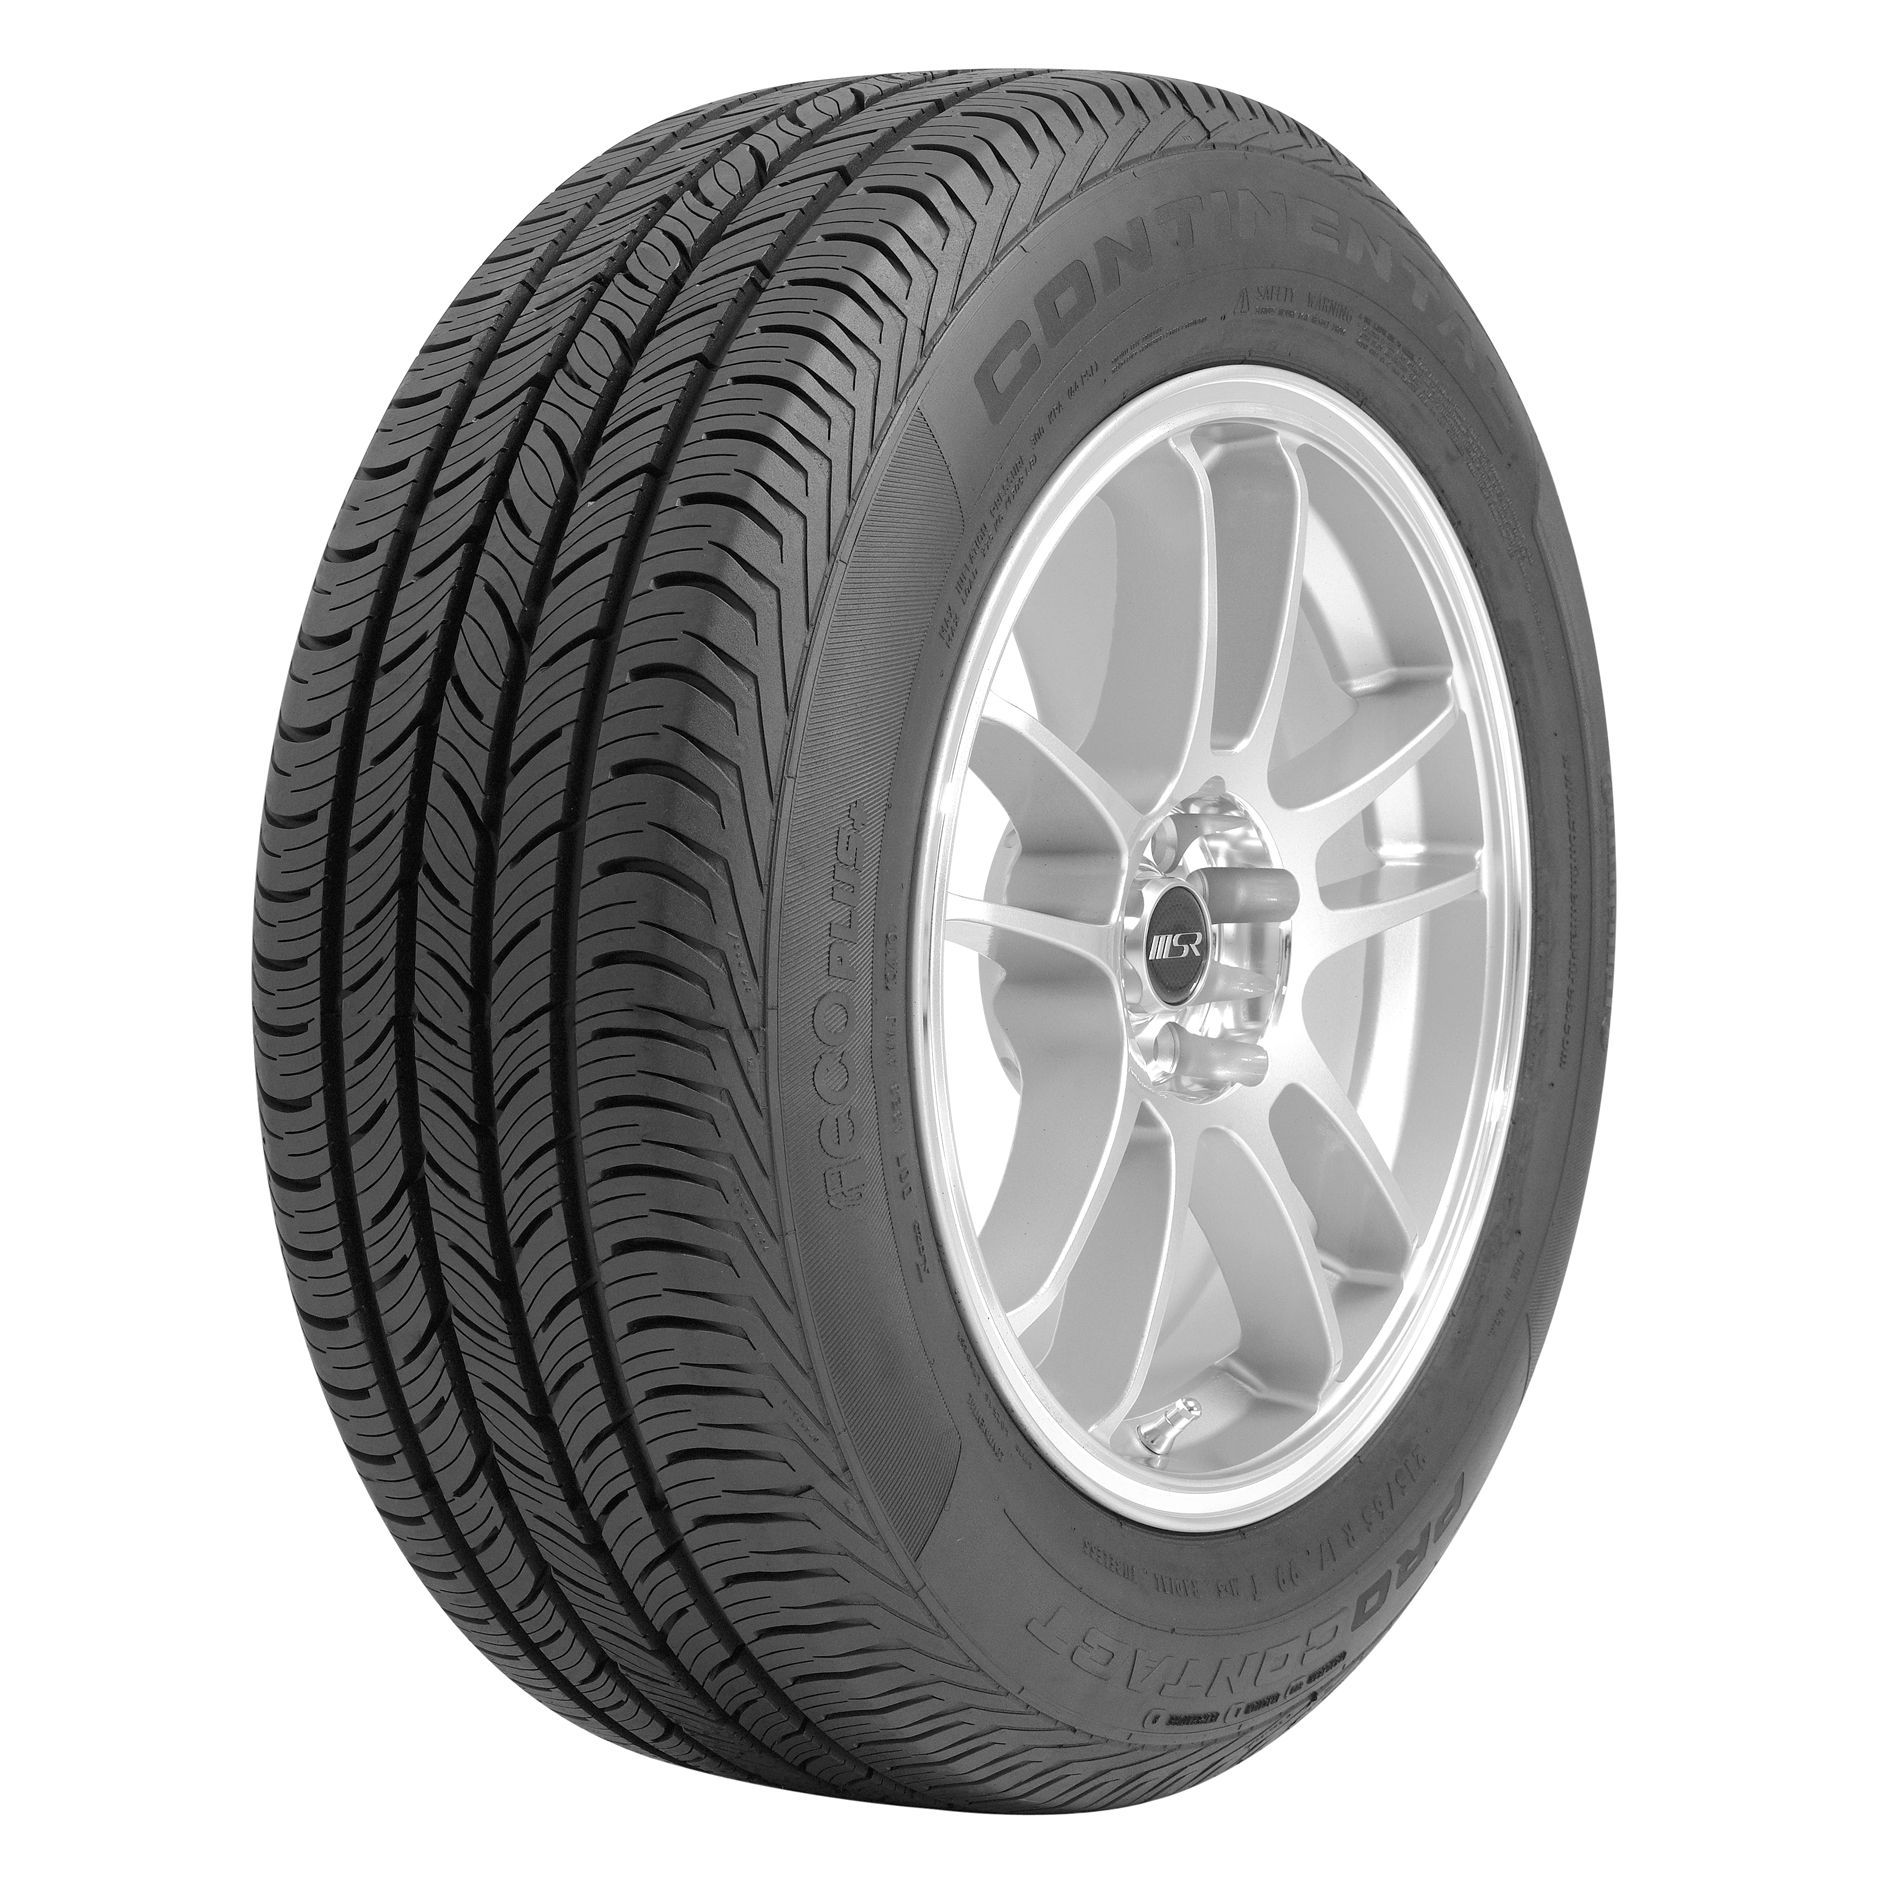 Continental Pro Contact Eco Plus - 225/65R17 102T BW - All-Season Tire